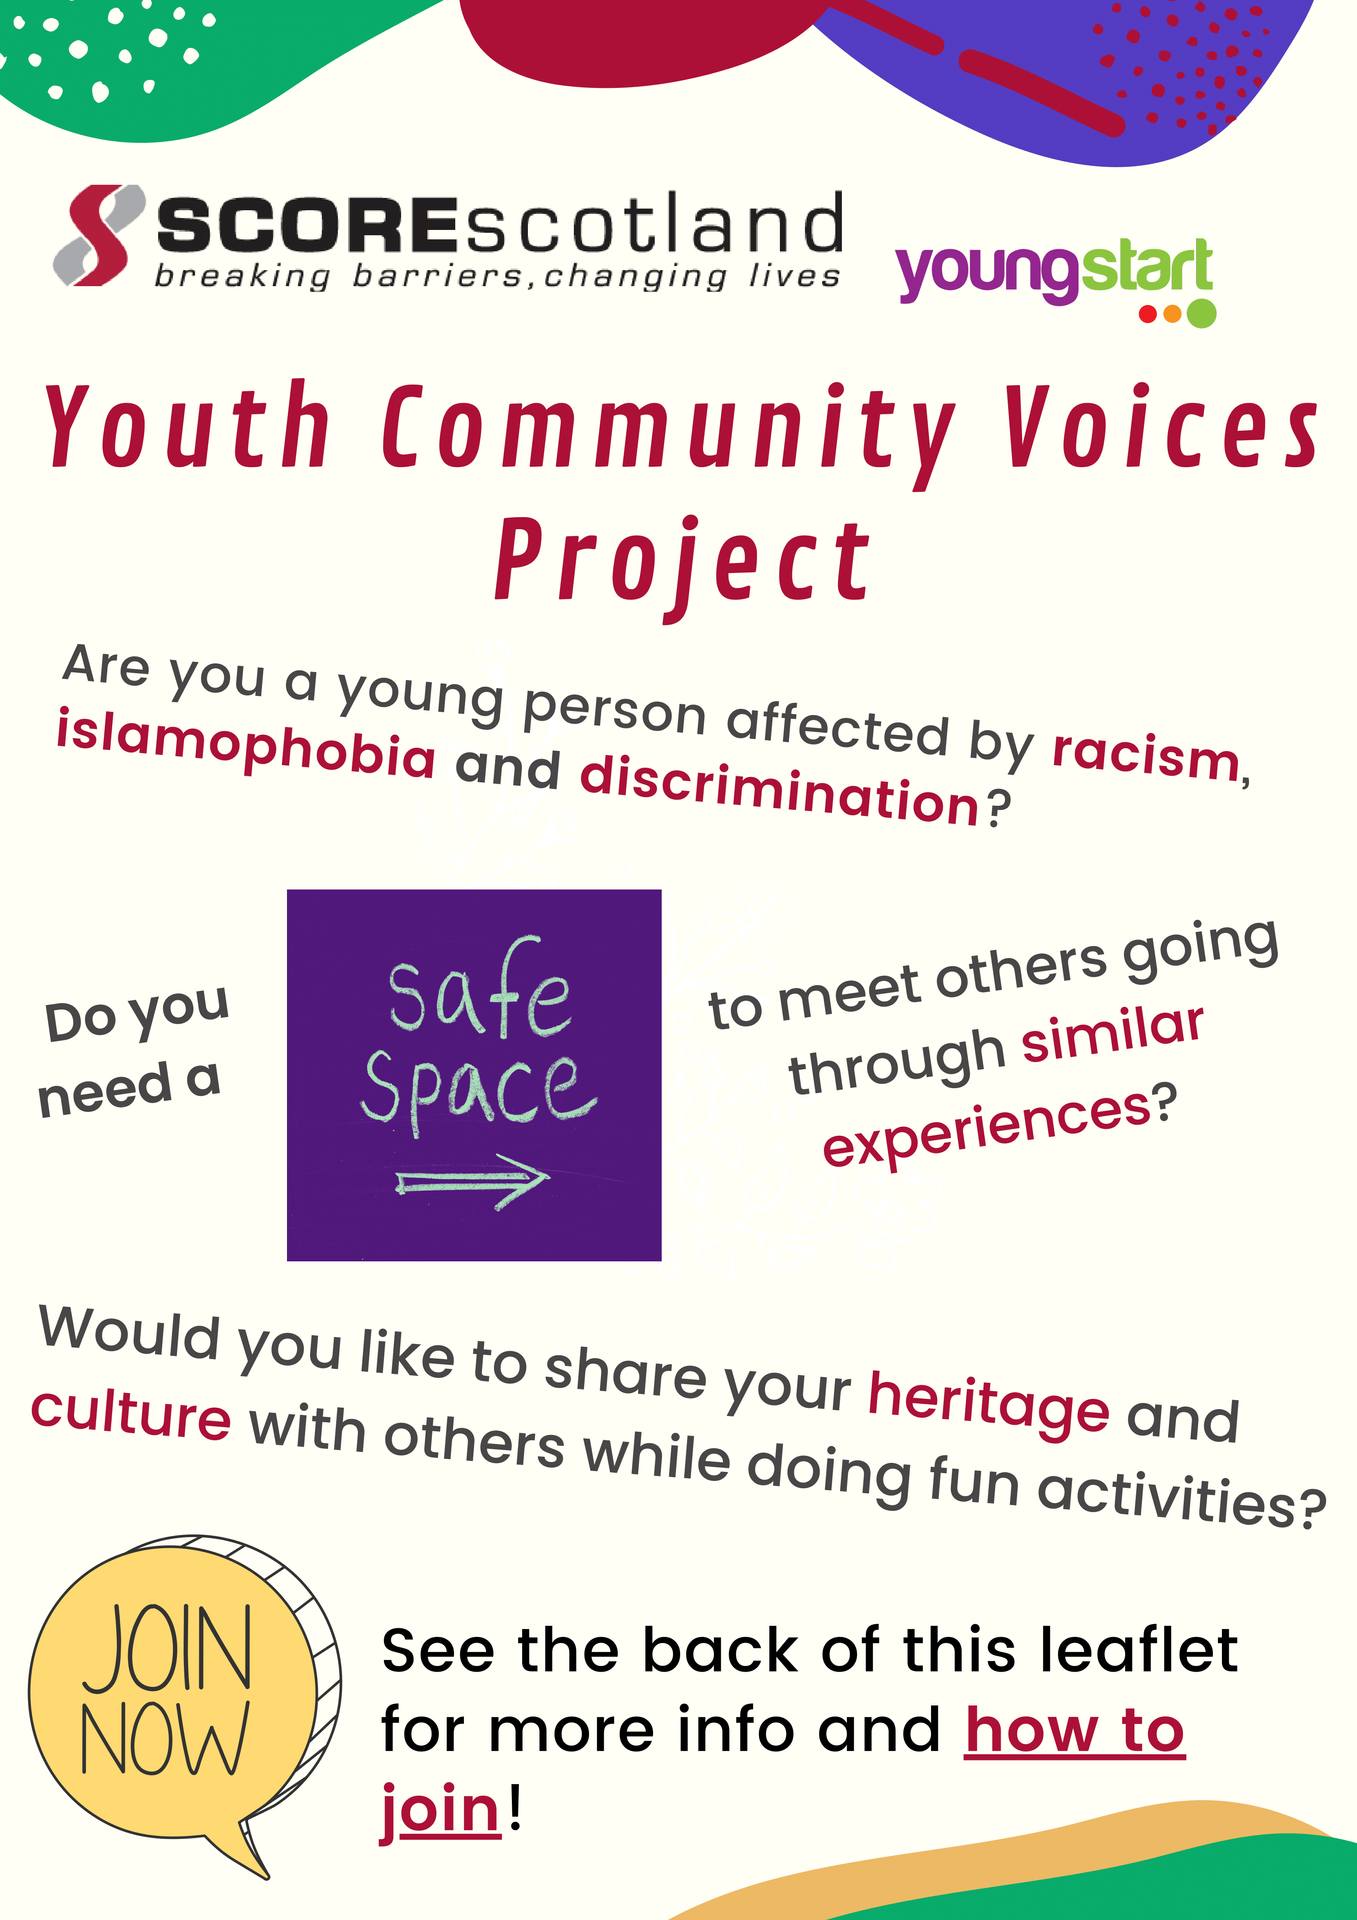 SCOREscotland youth communitry voices Featured Image